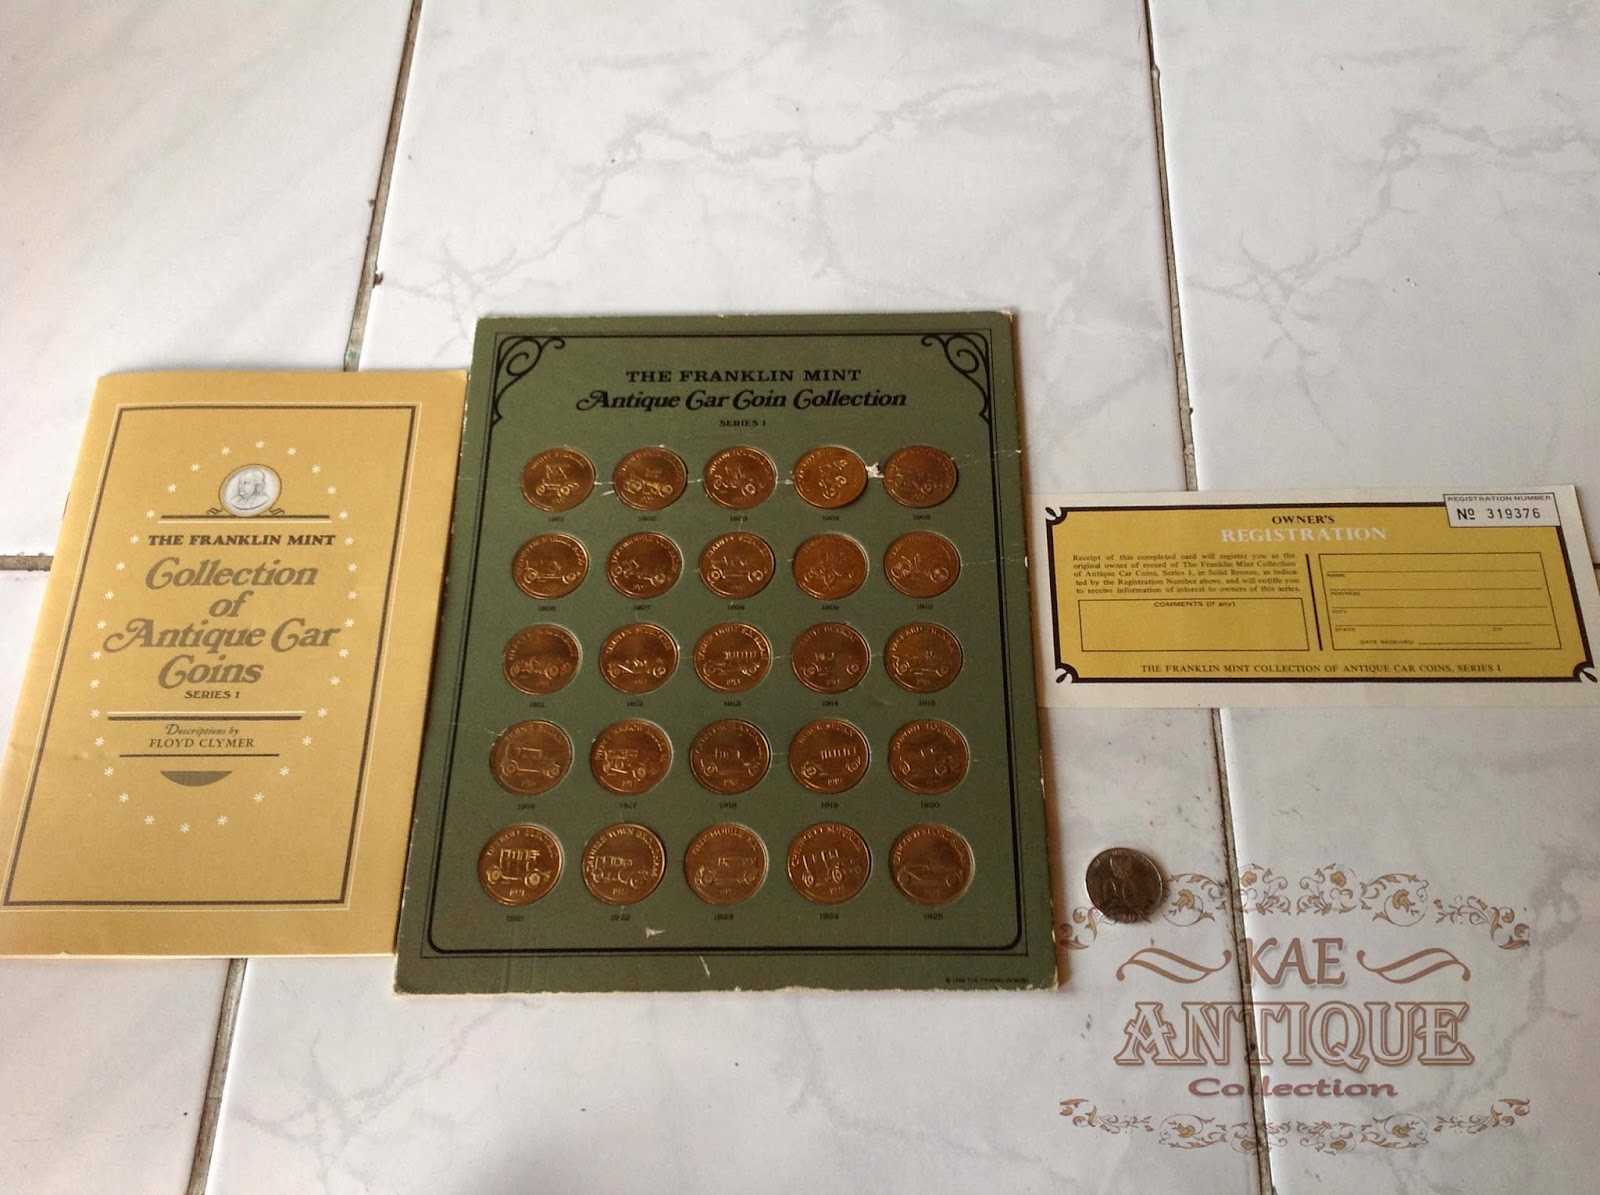 Kae Antique Collection: The Franklin Mint Antique Car Coin Collection